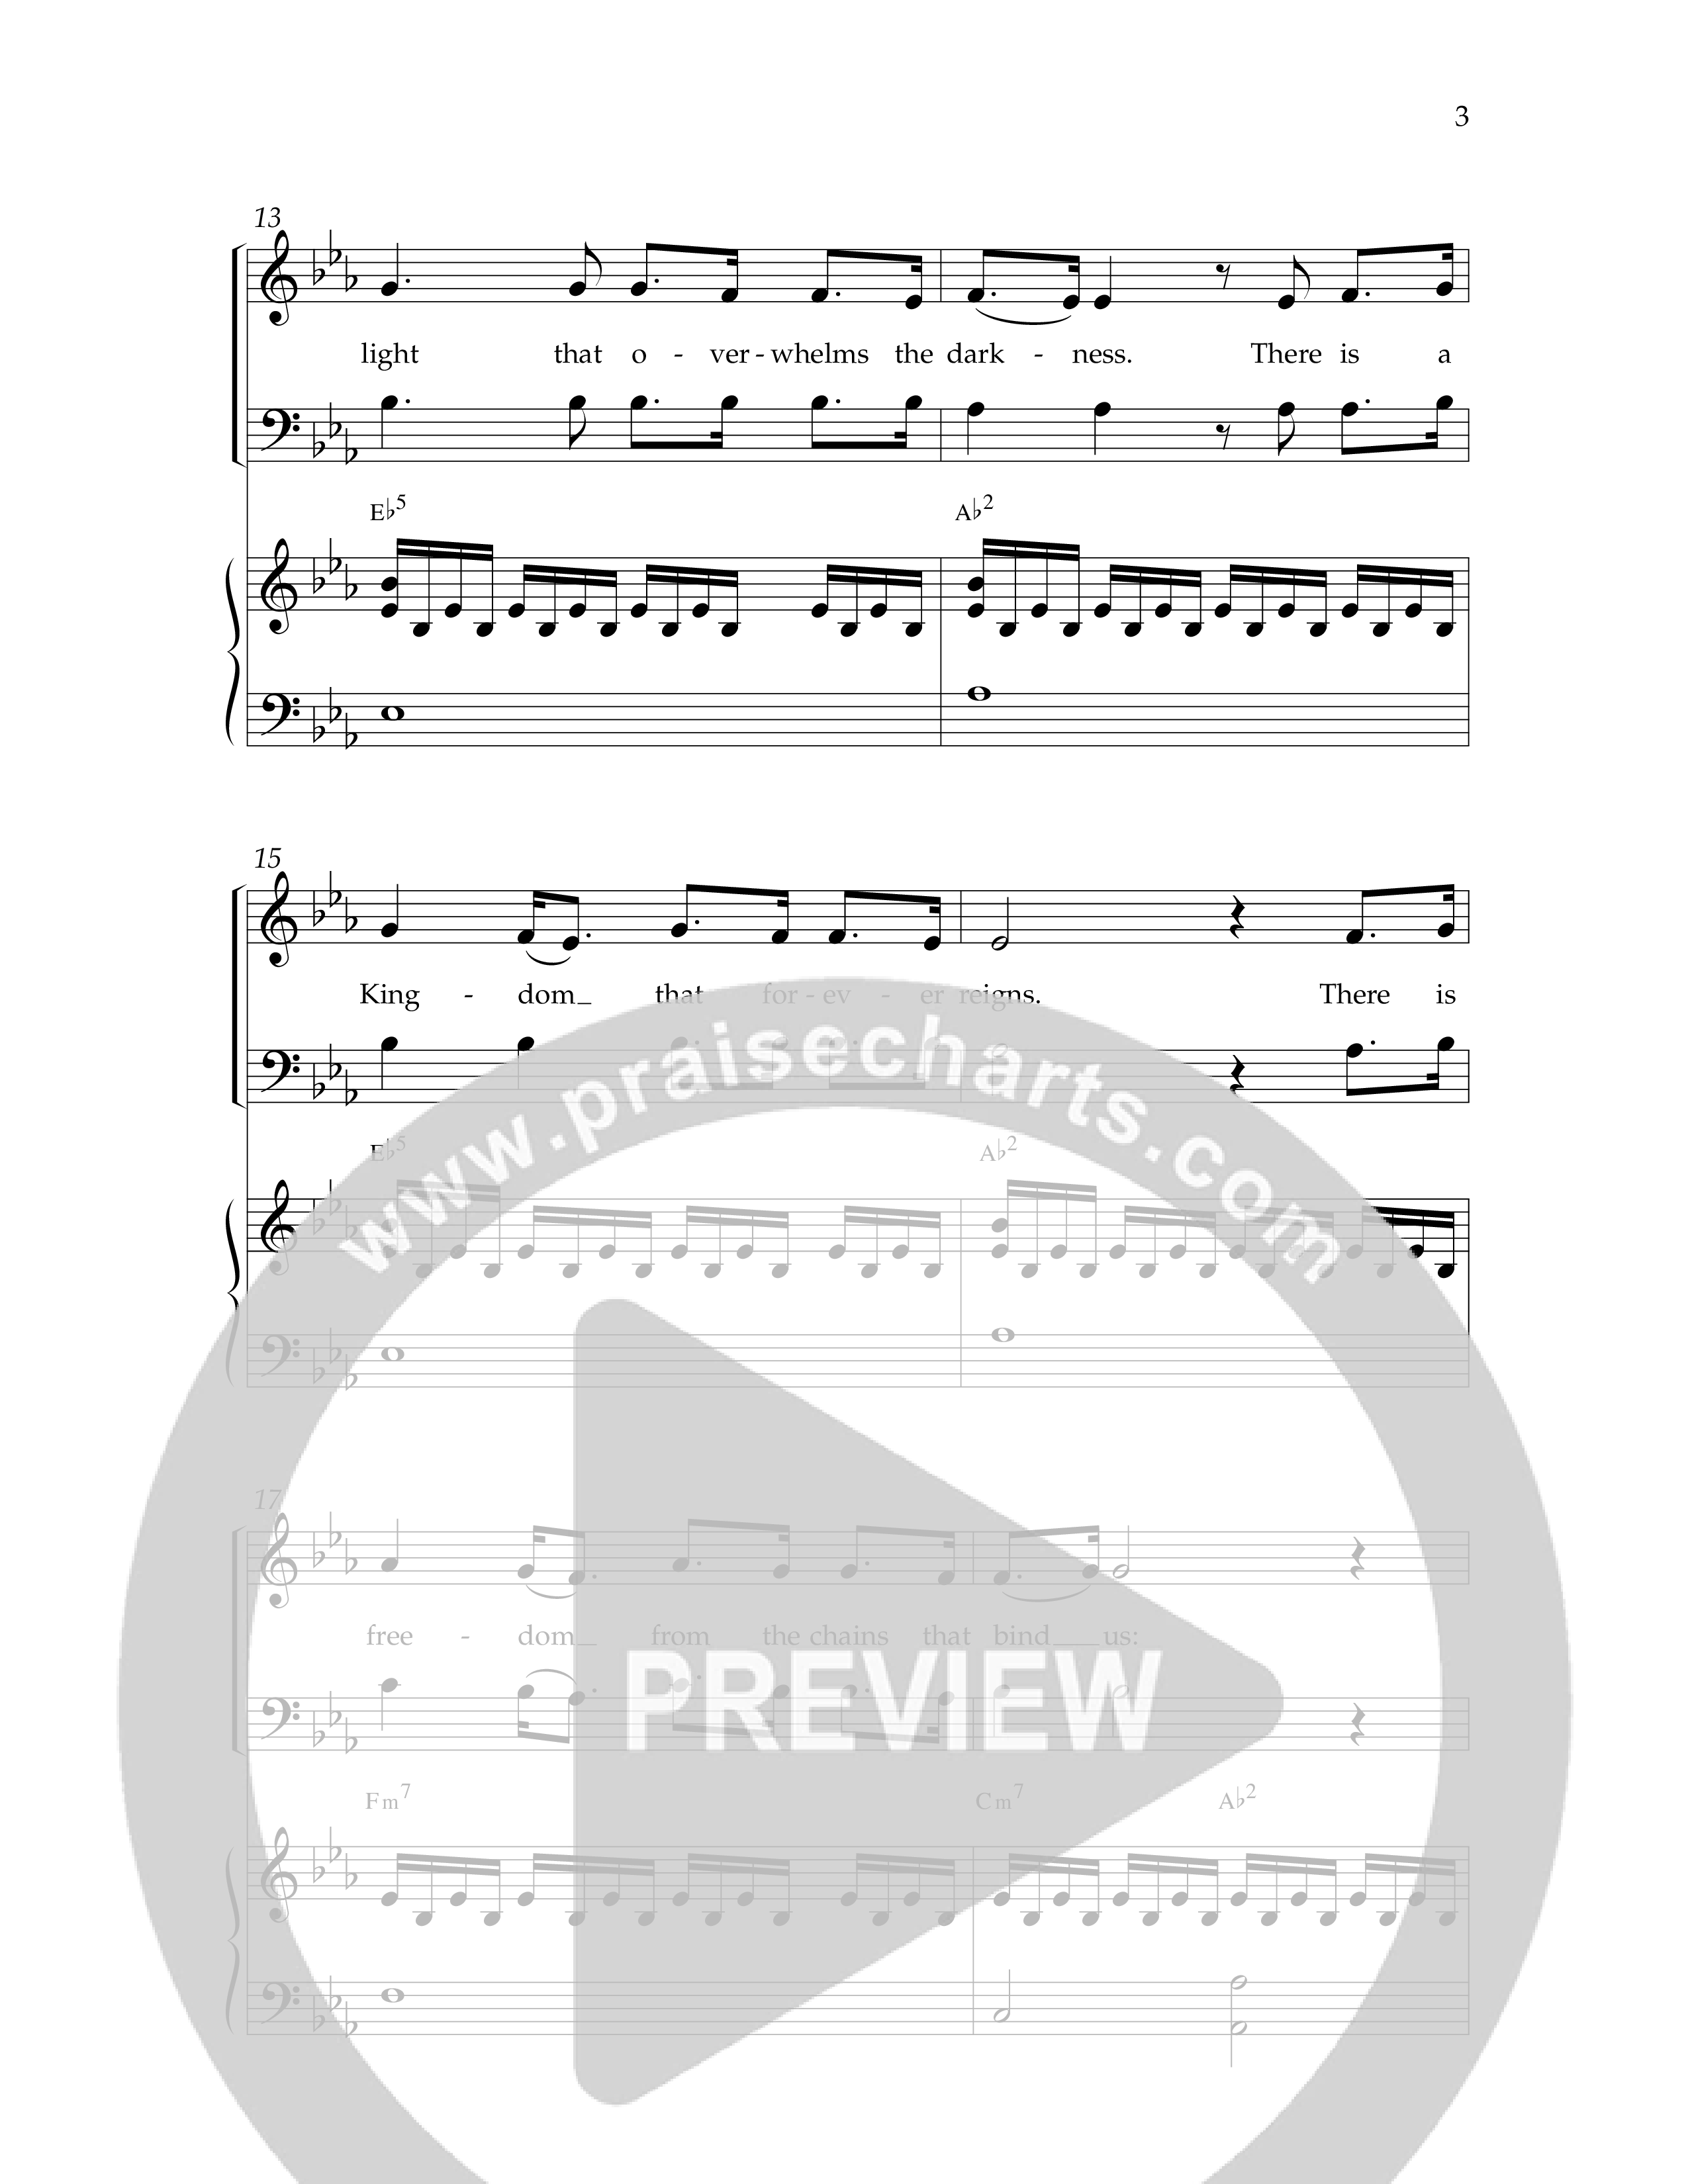 Jesus (Choral Anthem SATB) Anthem (SATB/Piano) (Lifeway Choral / Arr. Jay Rouse)